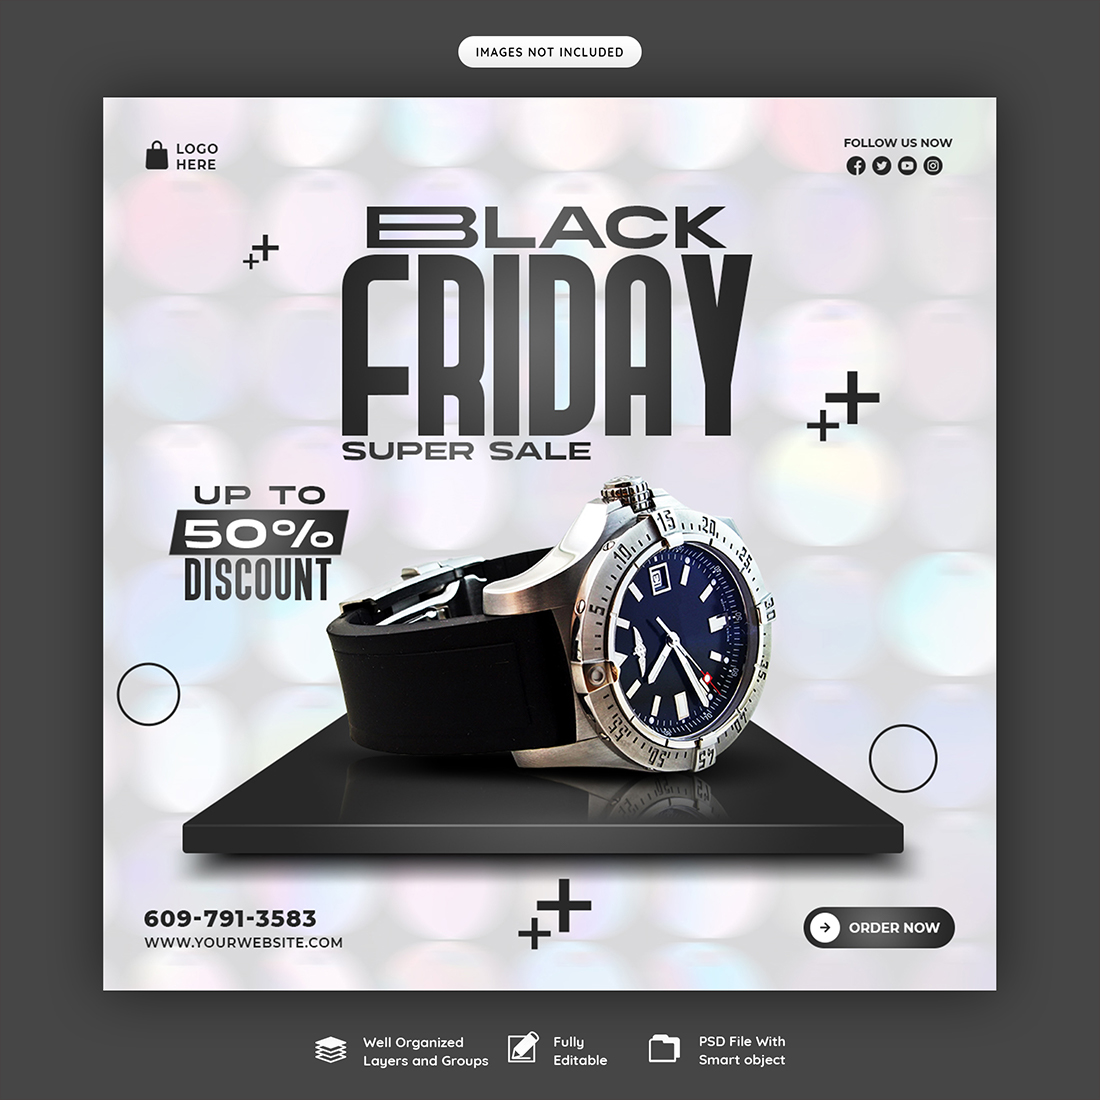 Black Friday Social Media Design cover image.